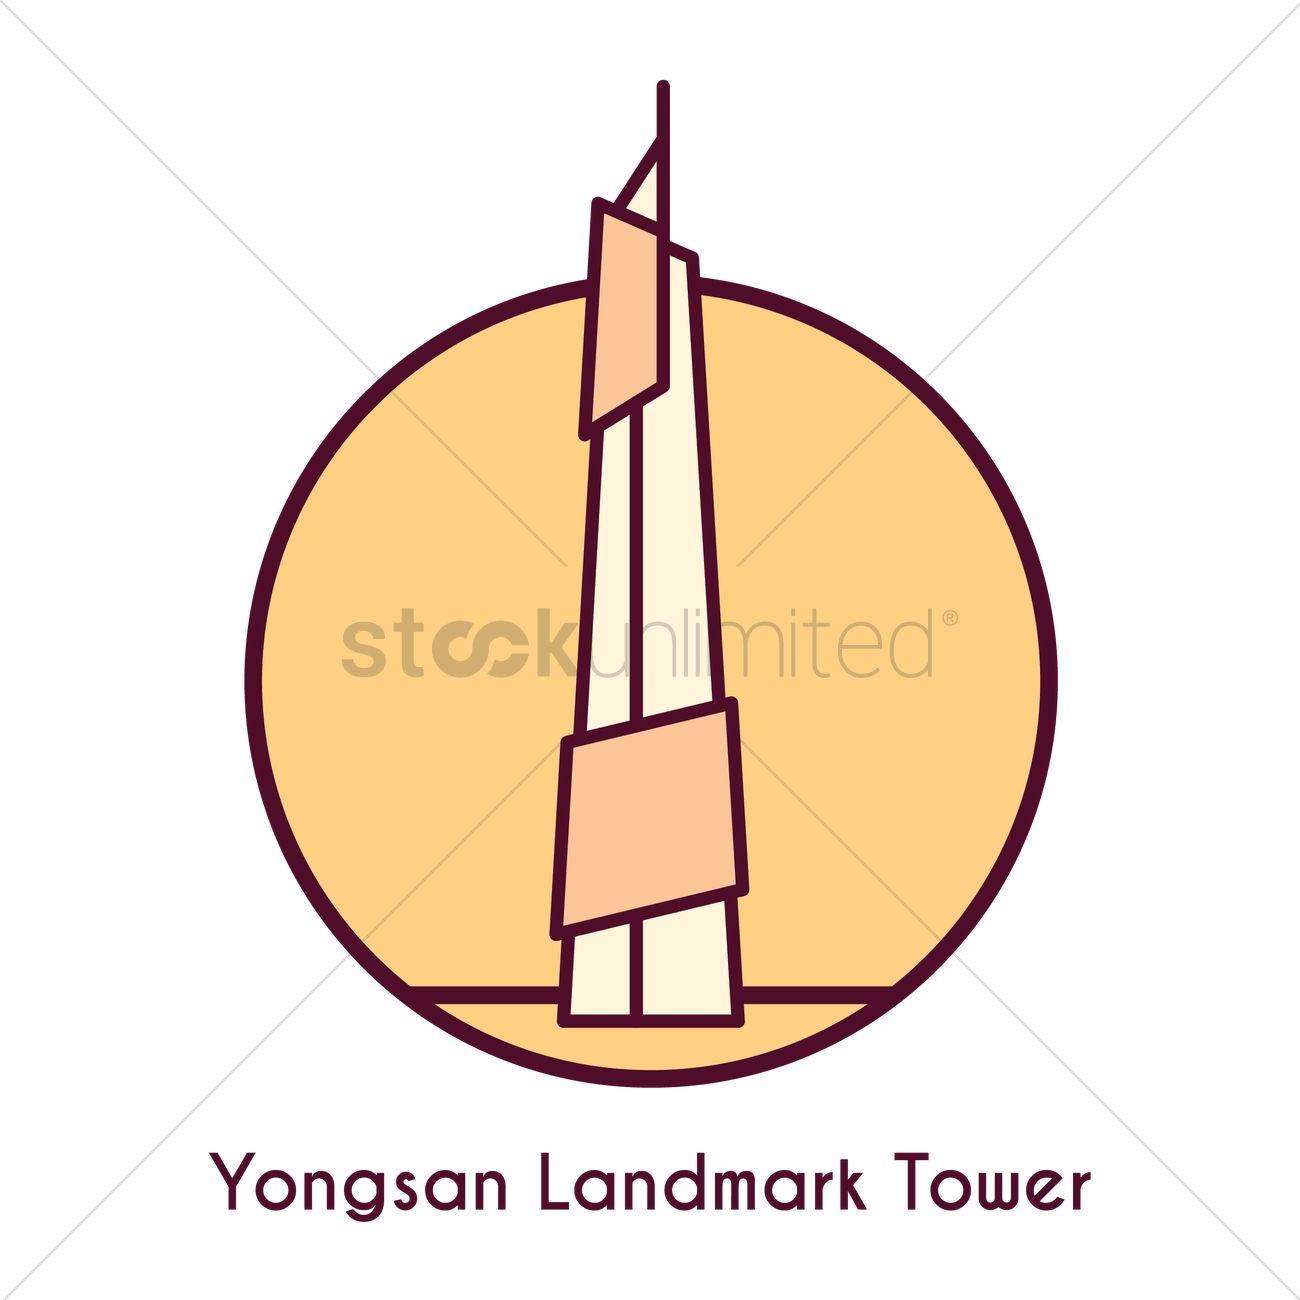 Yongsan landmark tower Vector Image.